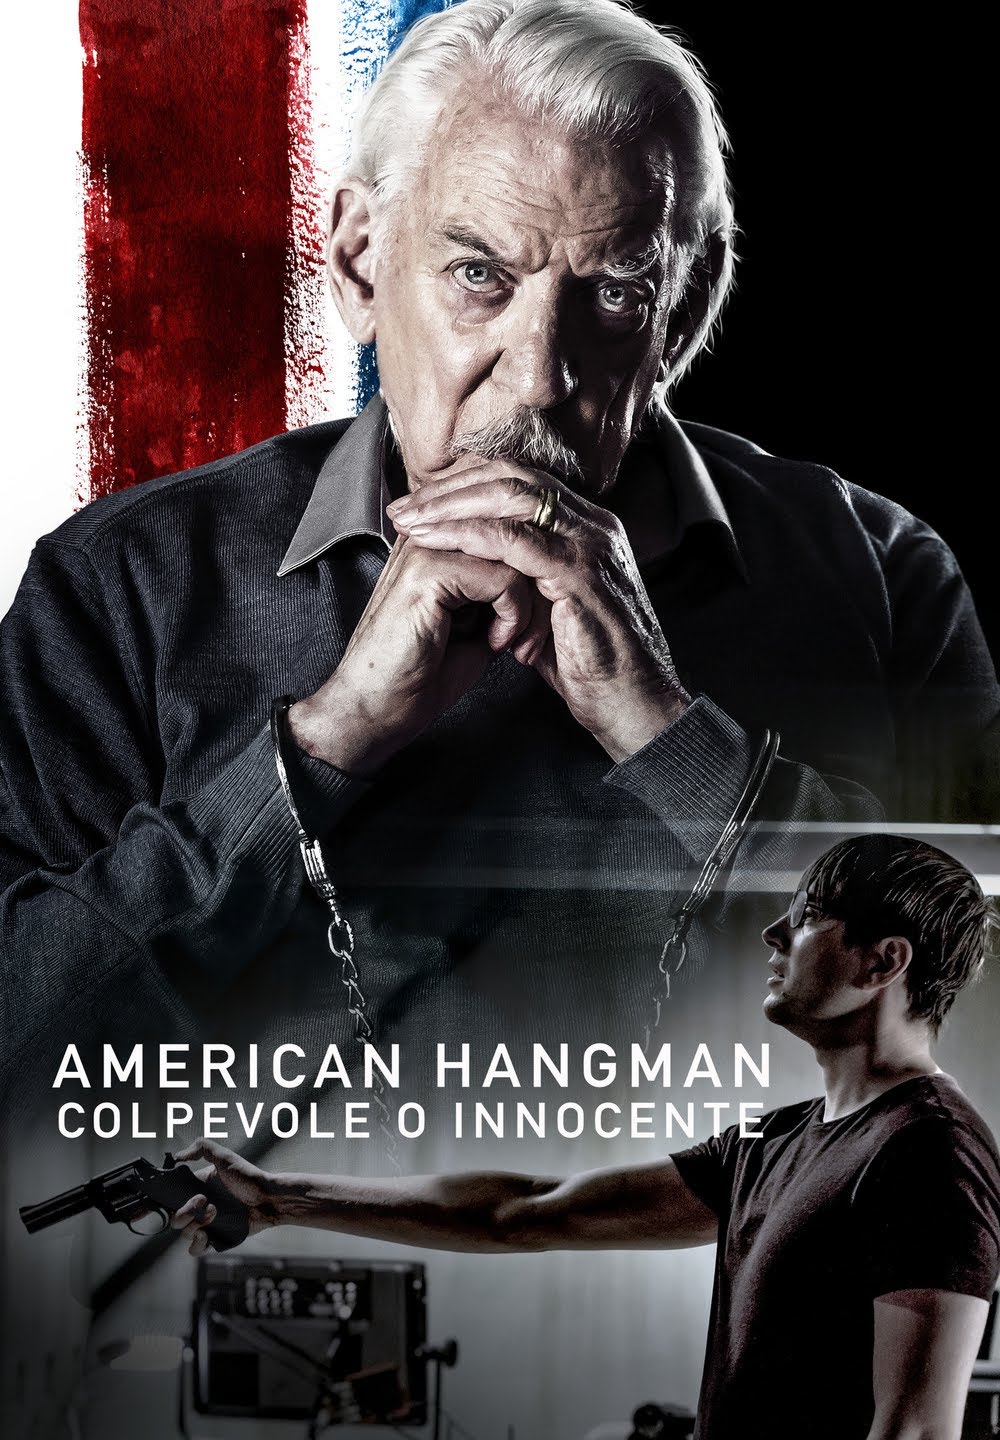 American Hangman – Colpevole o innocente [HD] (2019)